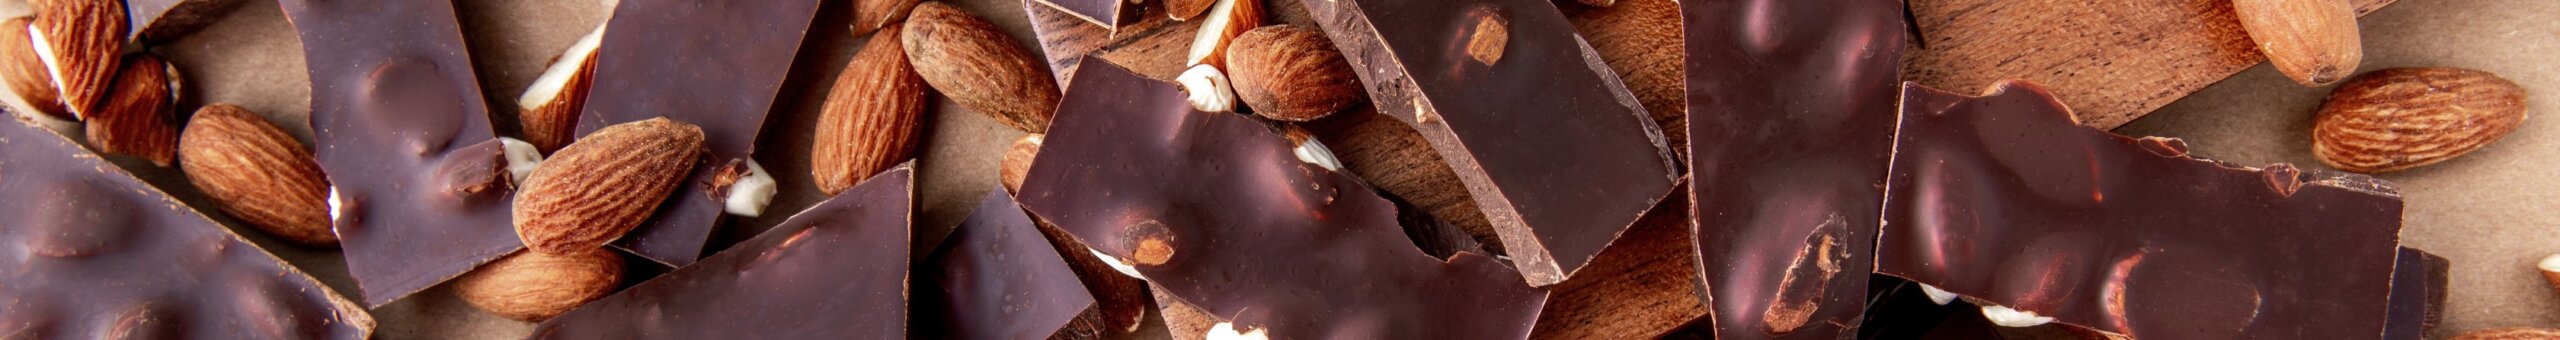 5 Reasons to Eat Fair Trade Chocolate